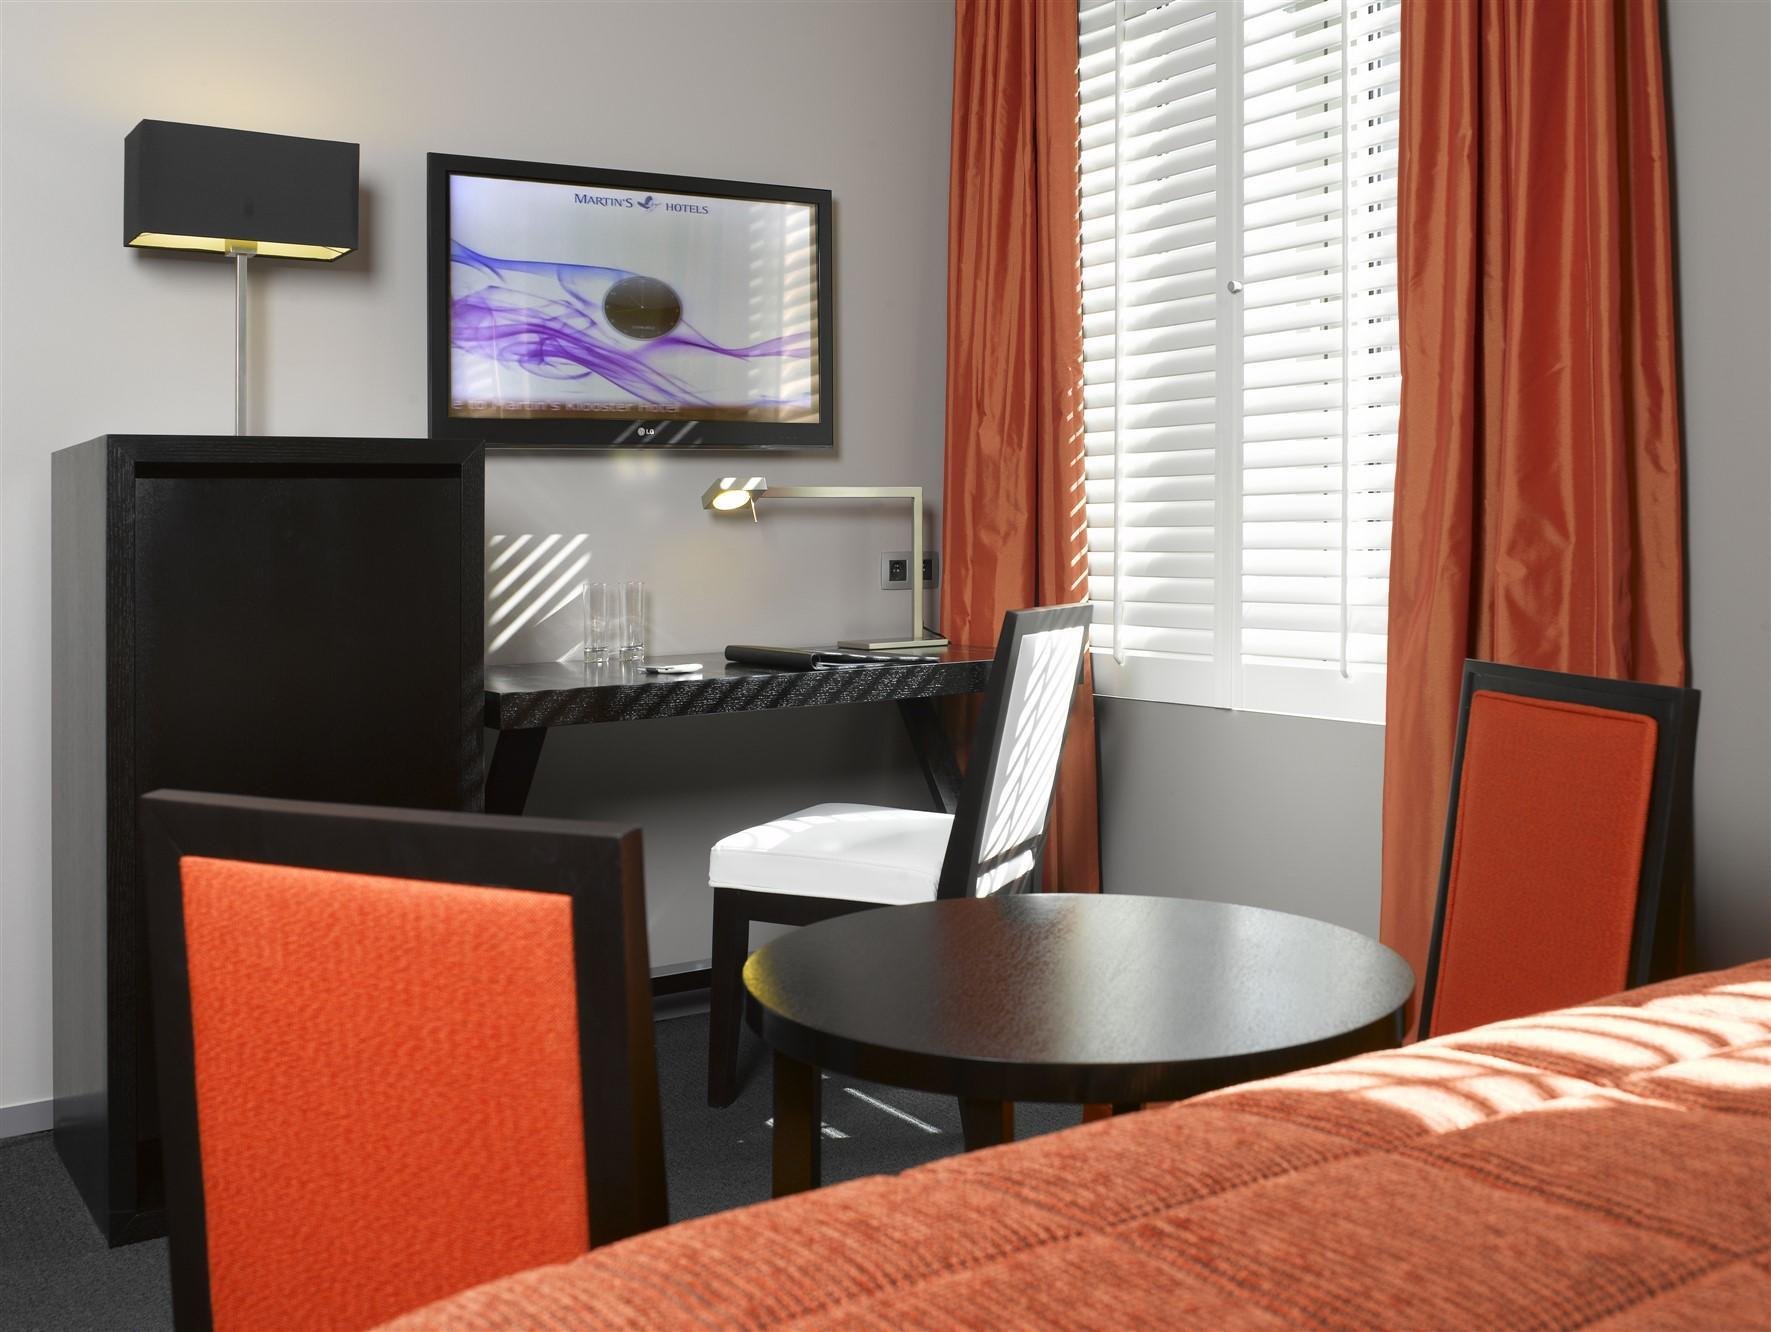 Chambre Cosy Plus, chambre confort, hôtel historique, chambre avec salon, chambre avec bureau, chambre contemporaine